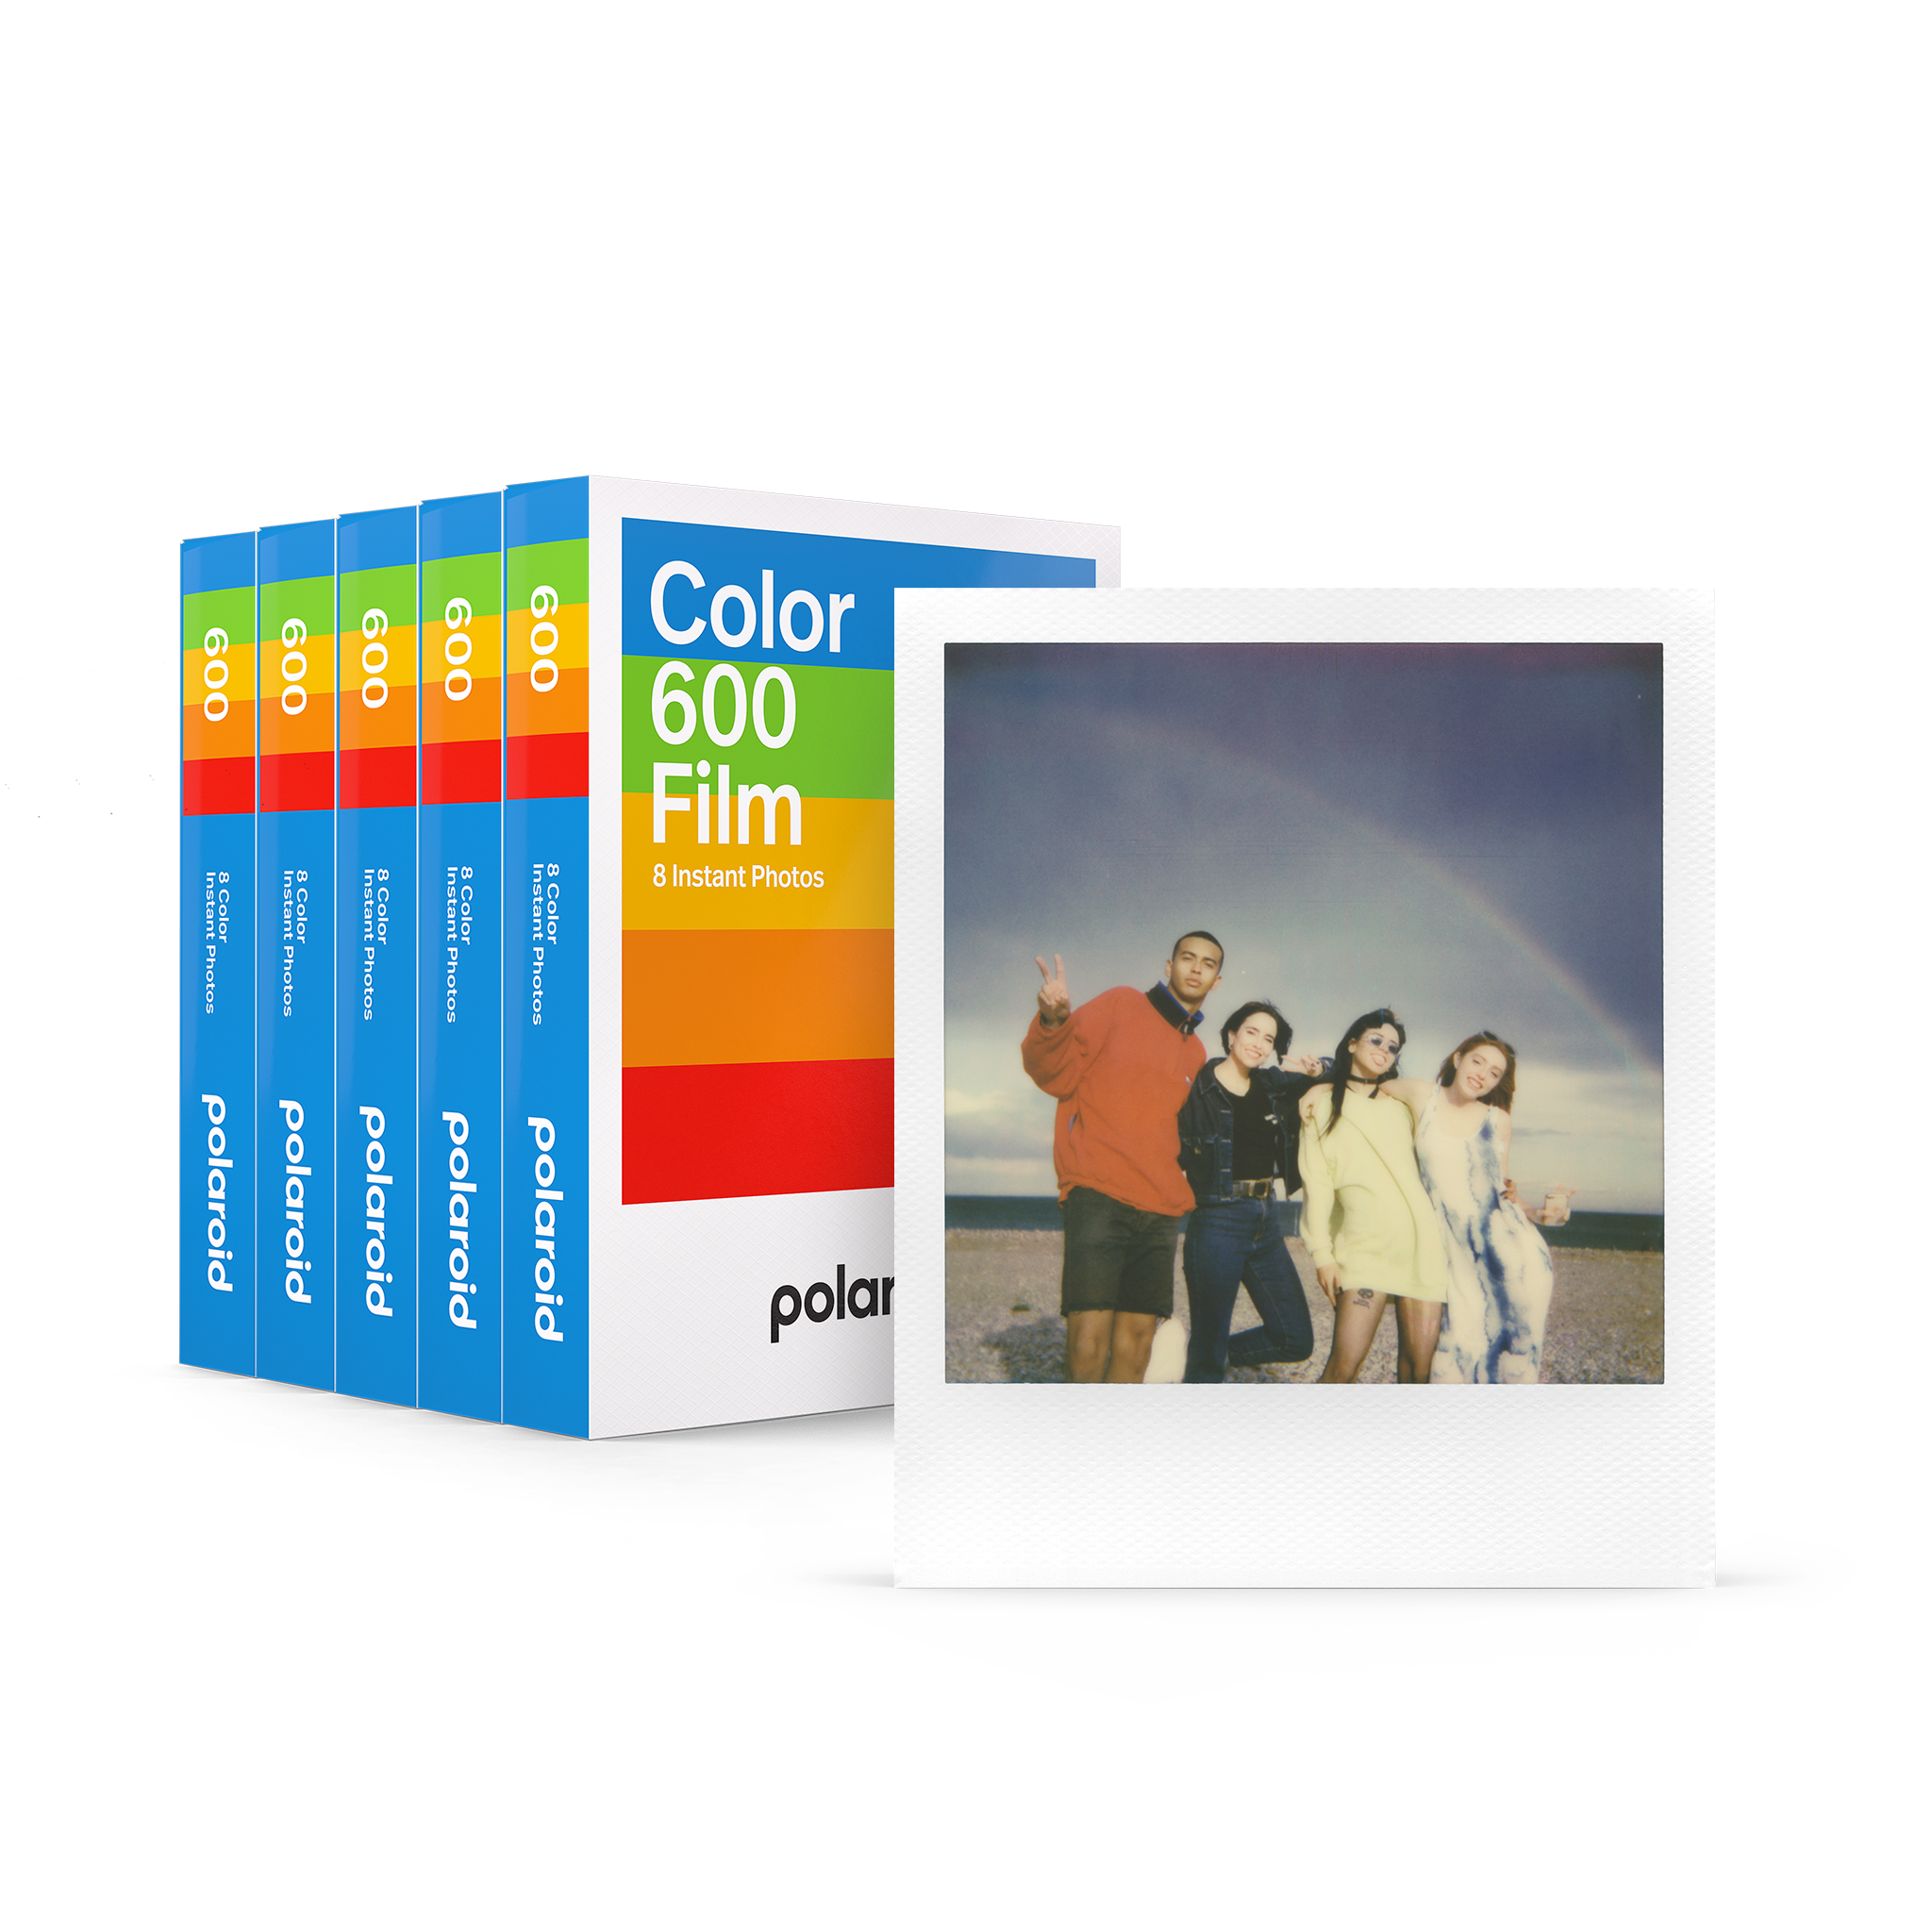 Polaroid Integral 600 Series, Camerapedia